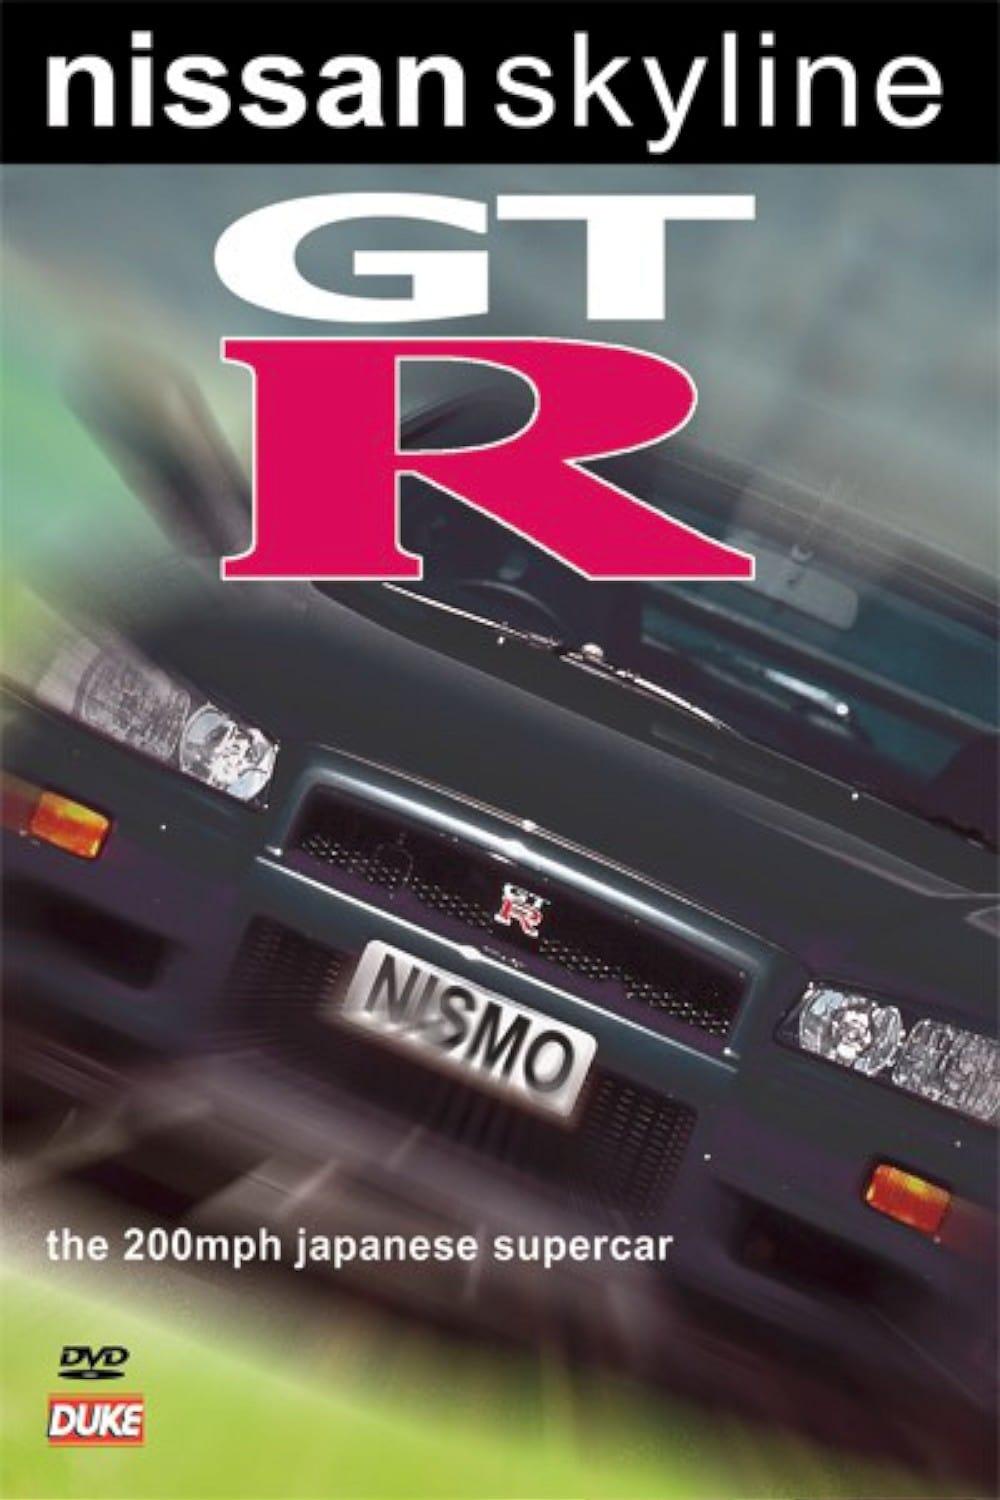 Nissan Skyline GT-R Story poster